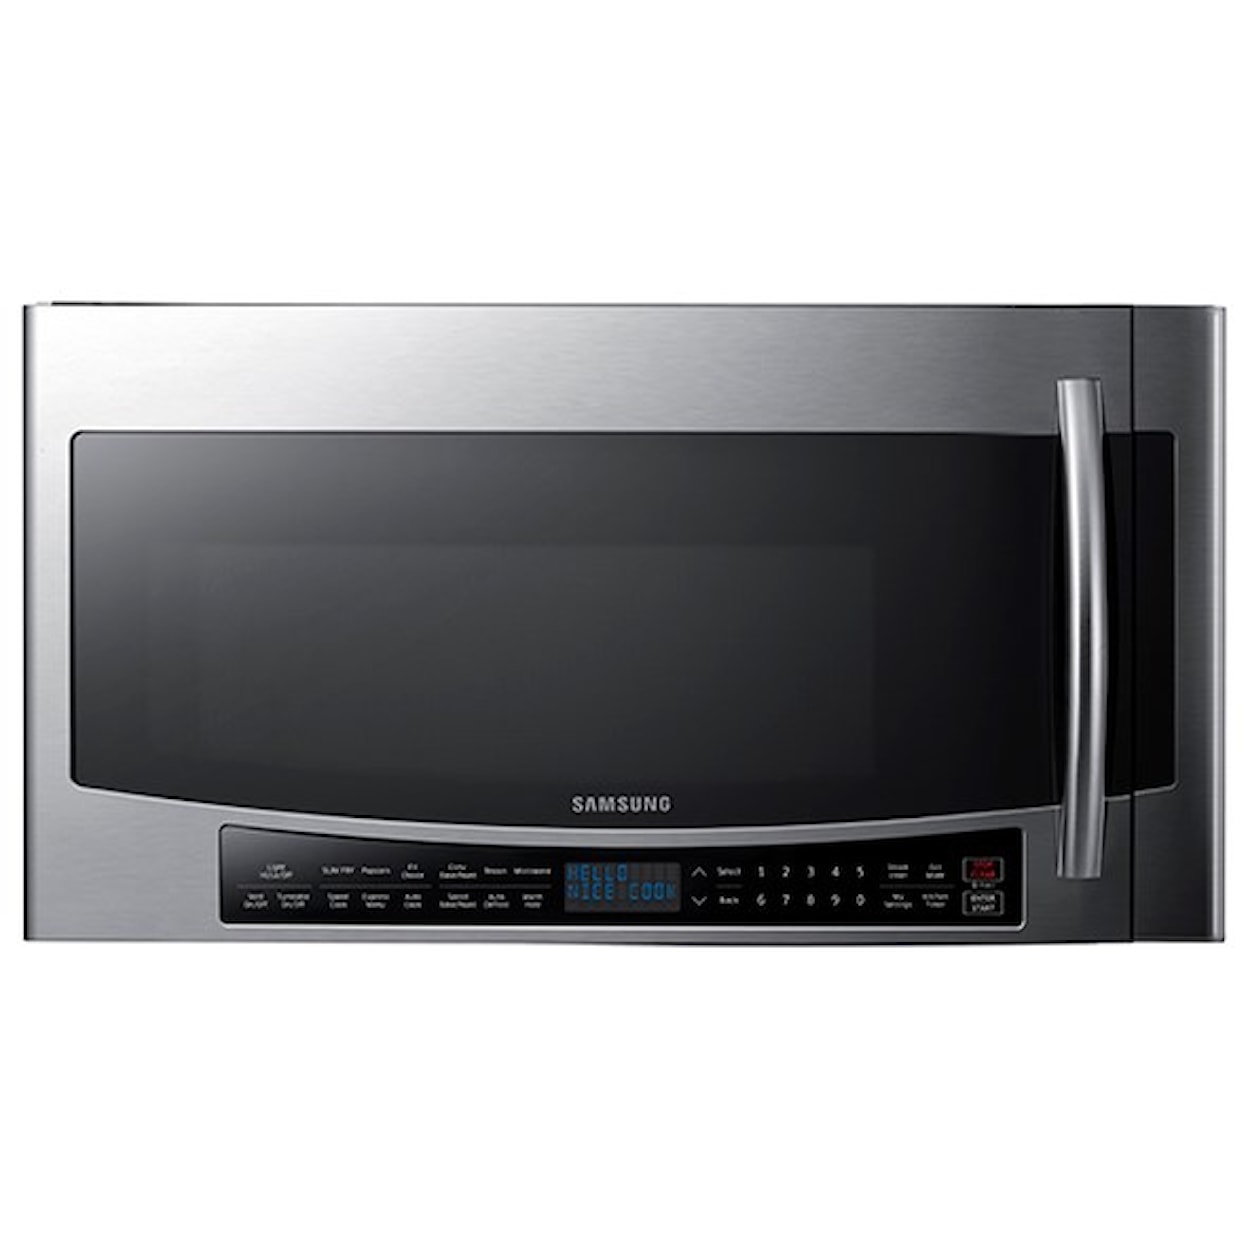 Samsung Appliances Microwaves 1.7 Cu.Ft. Over Range Convection Microwave